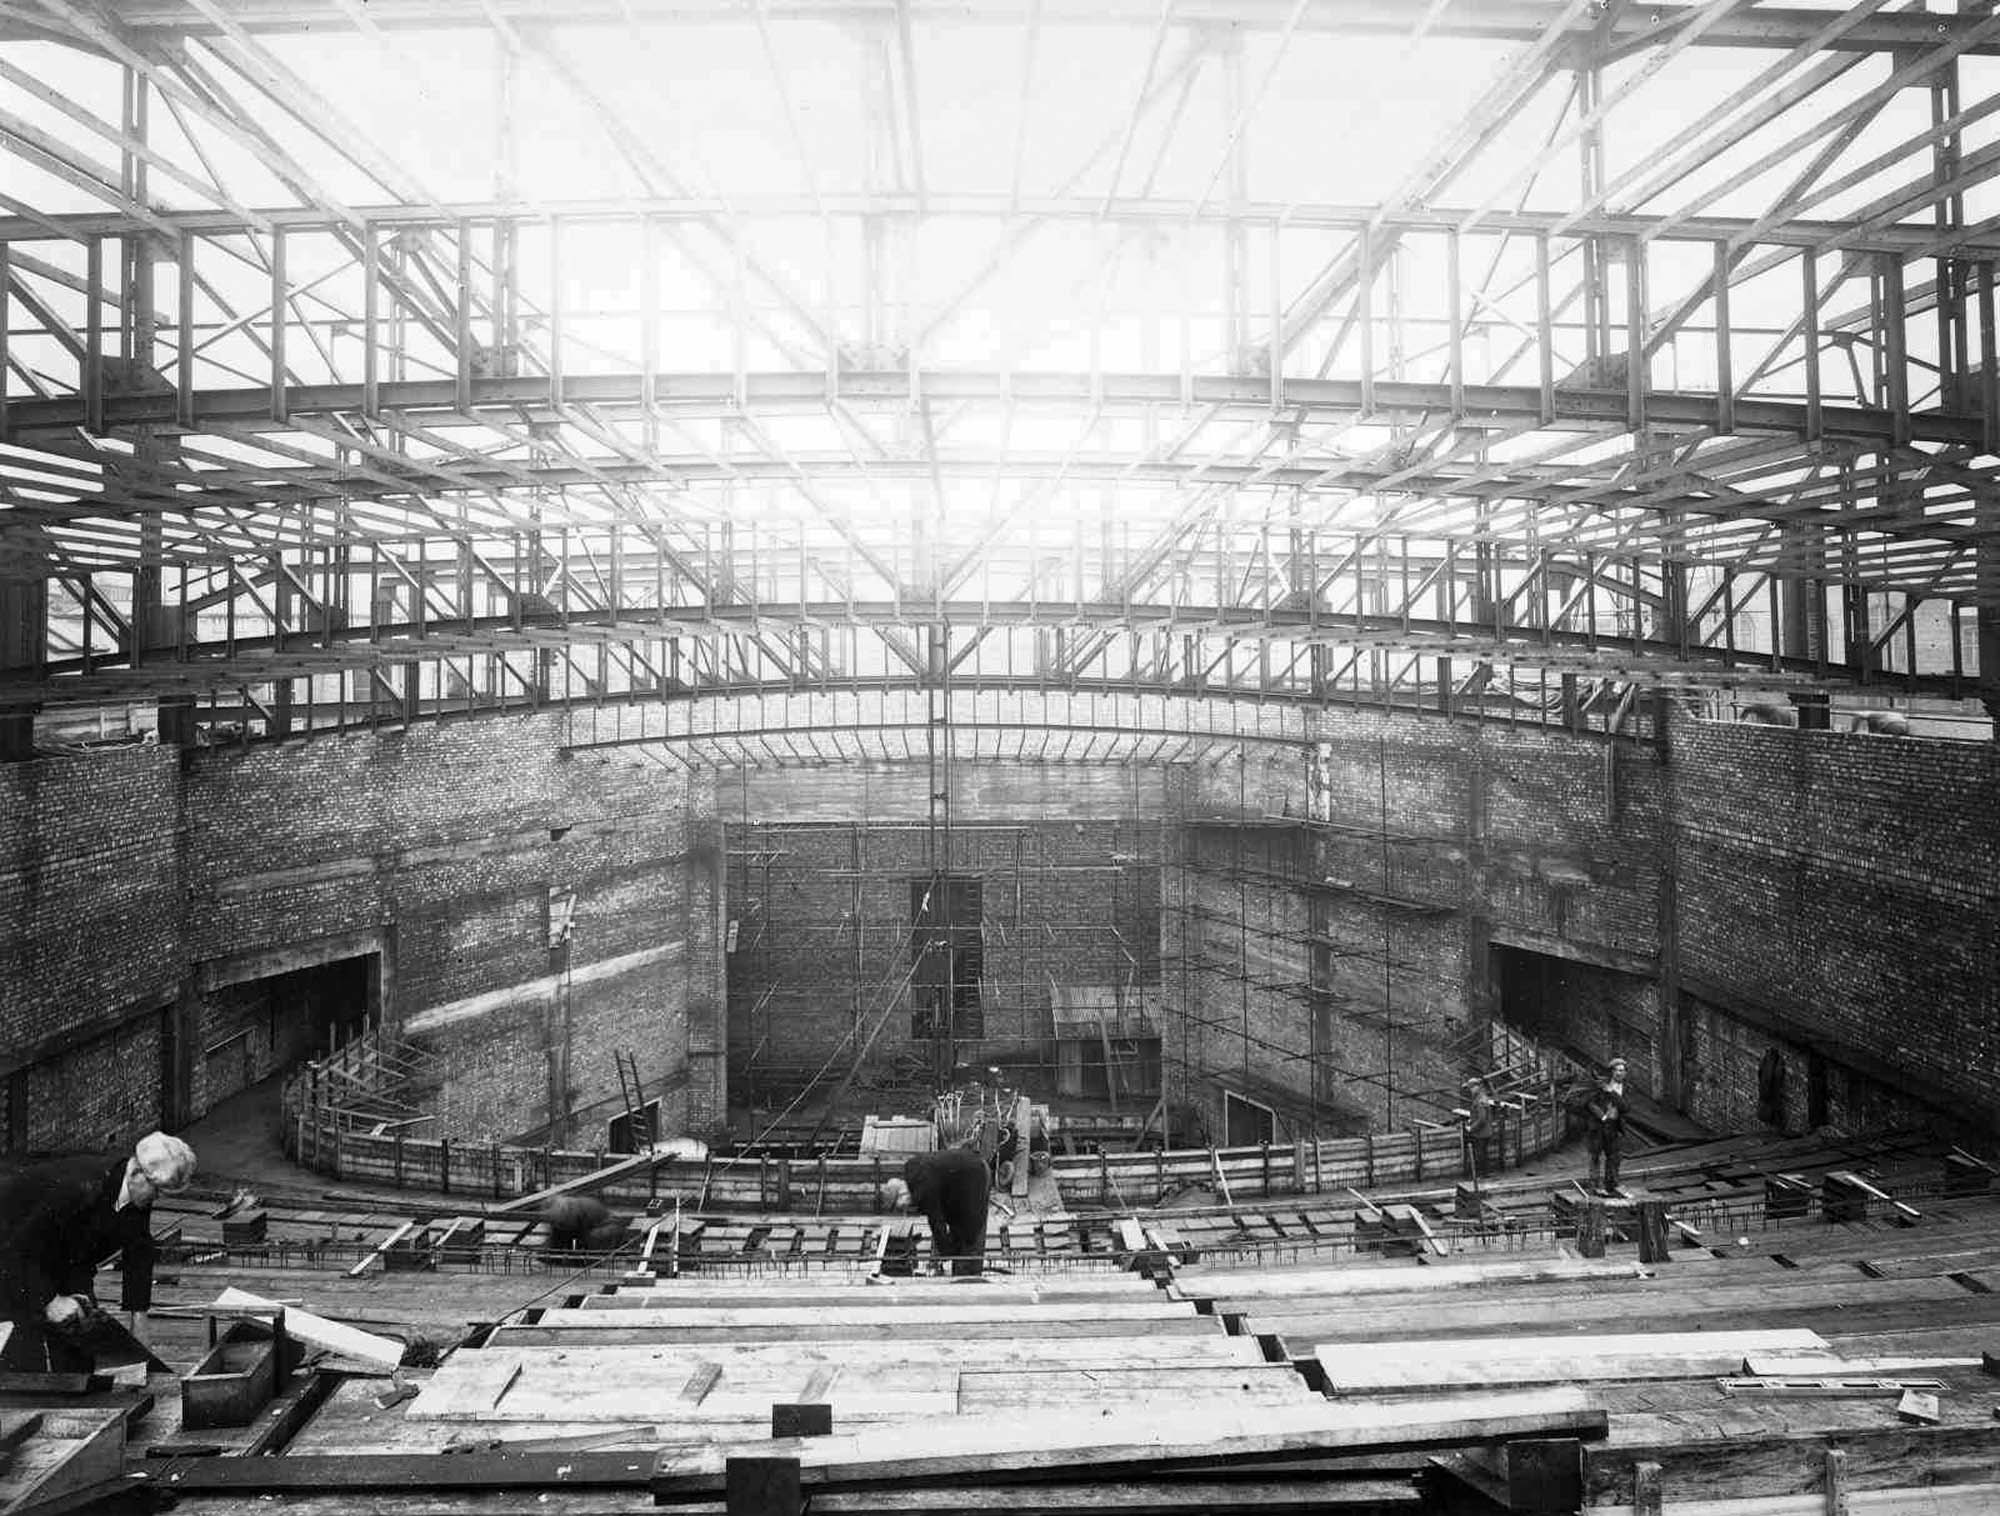 The main auditorium under construction, 1937 - Affective Digital Histories, University of Leicester